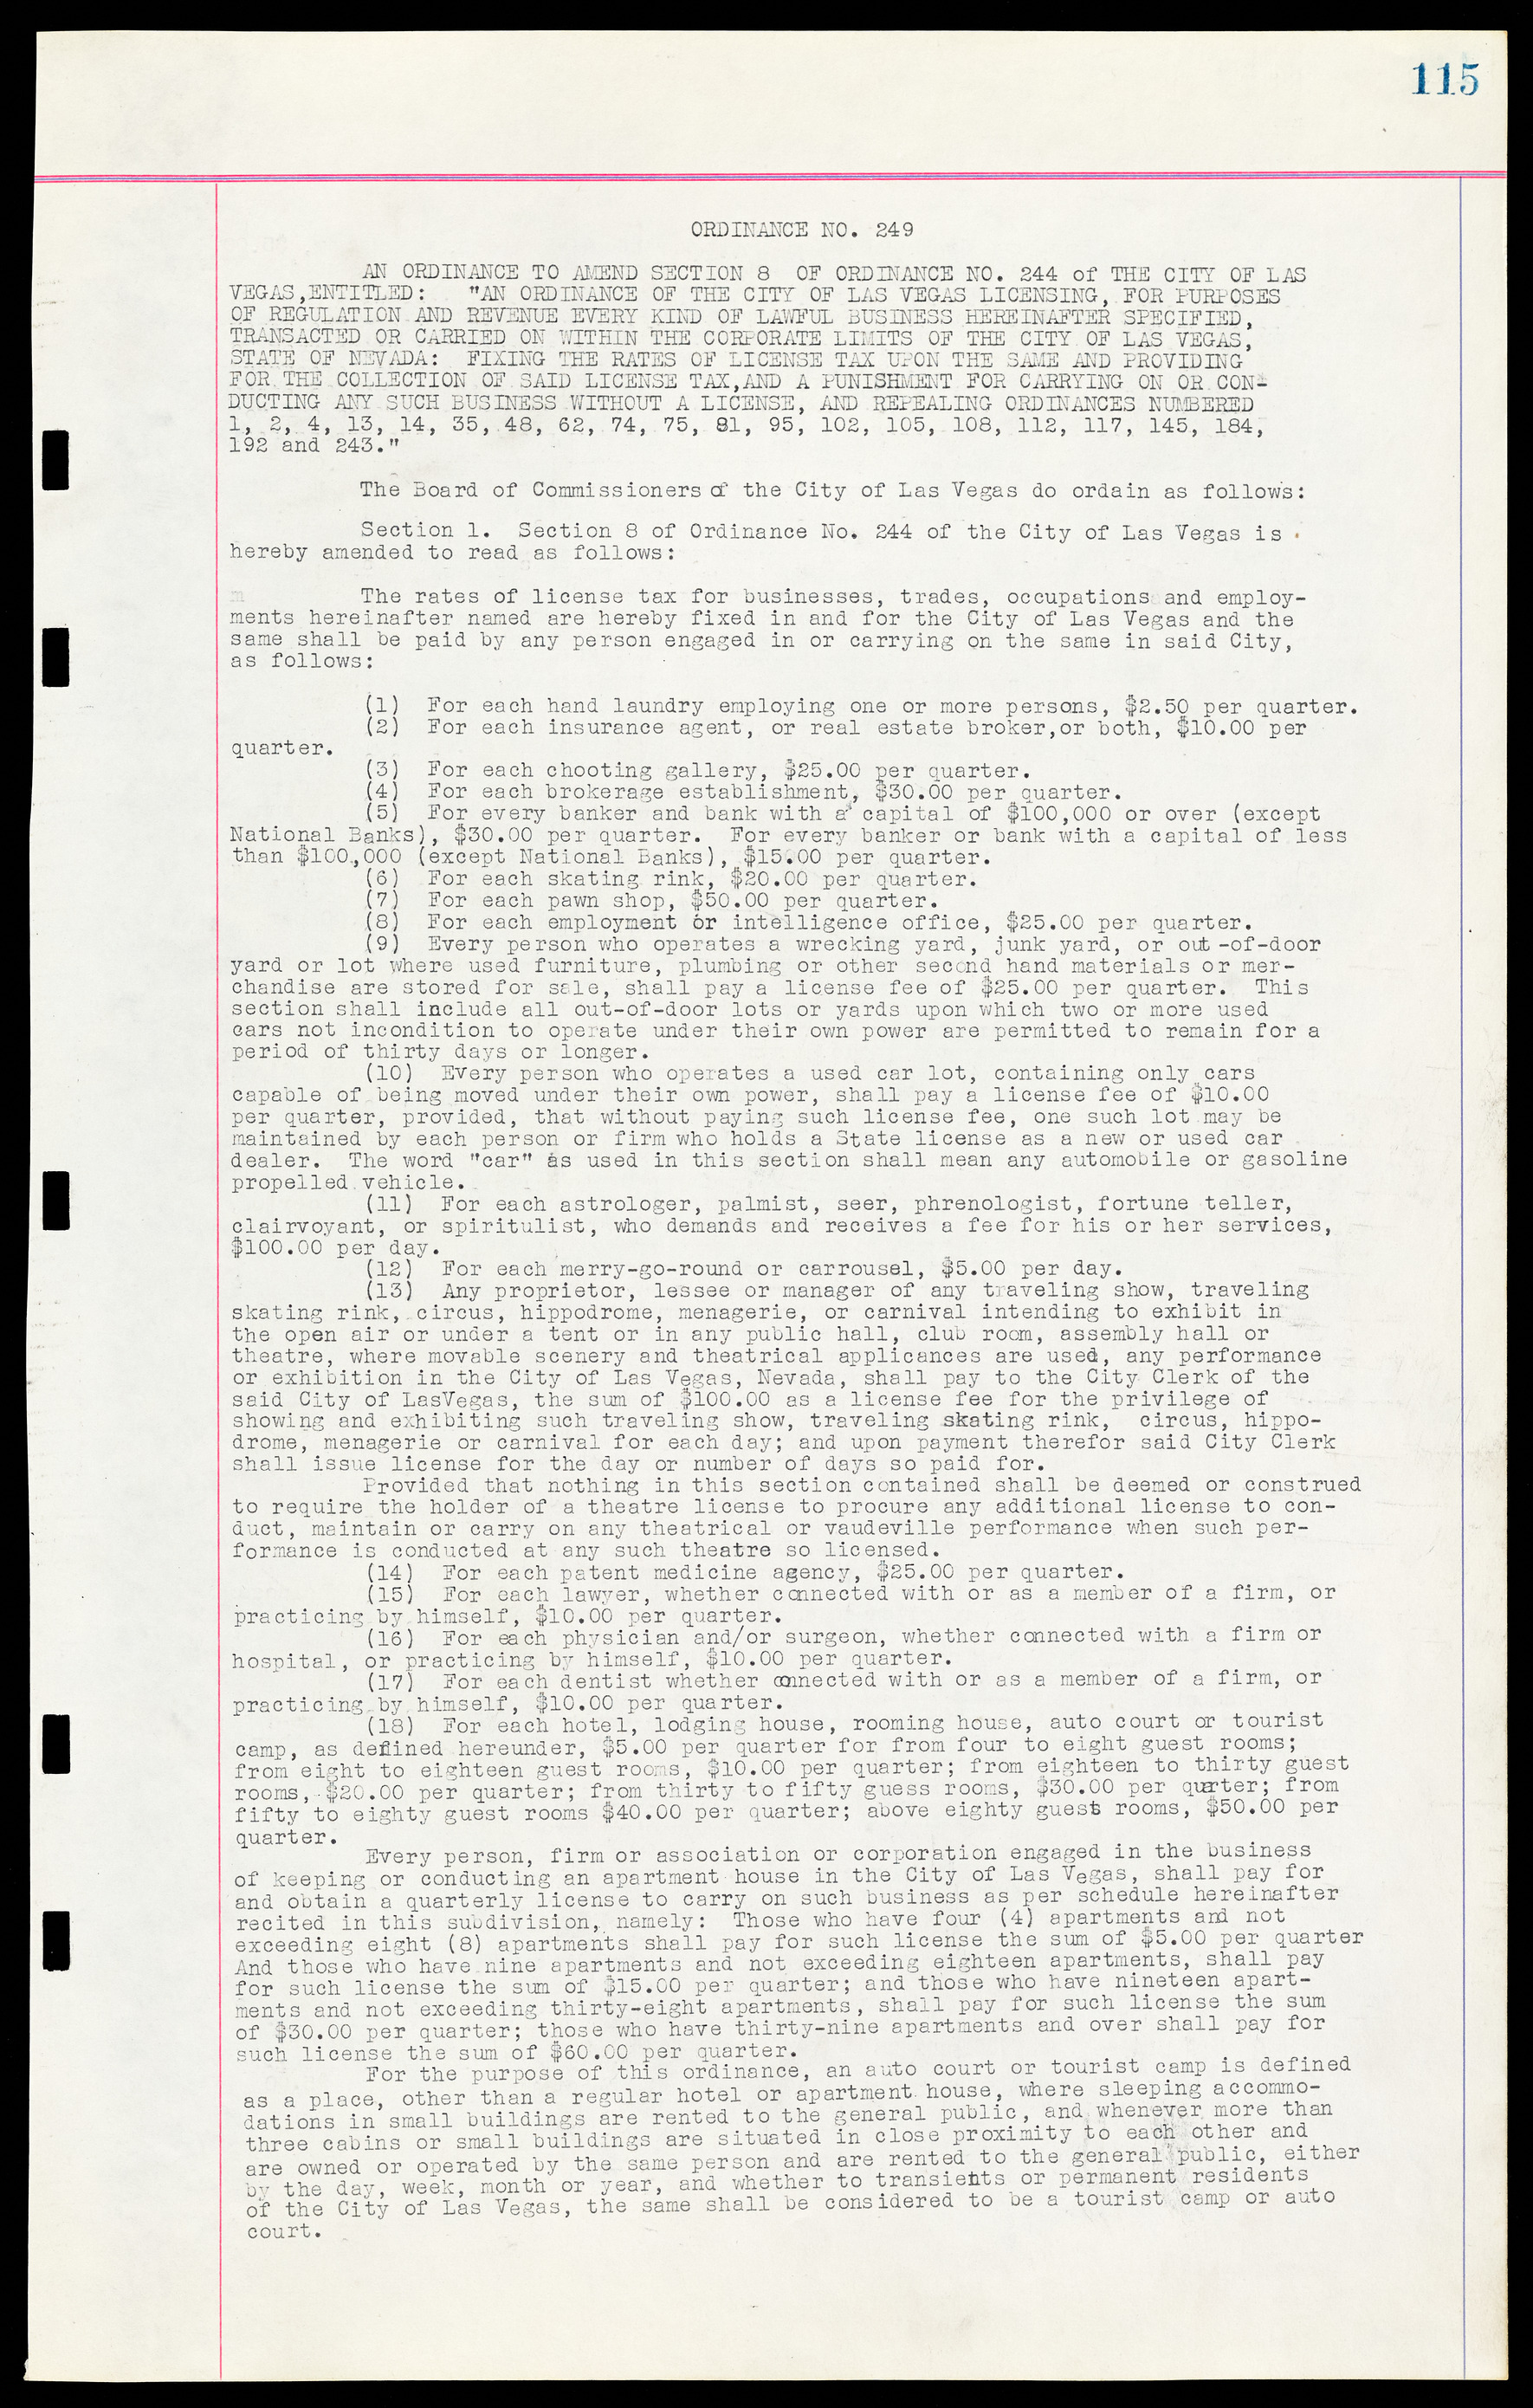 Las Vegas City Ordinances, March 31, 1933 to October 25, 1950, lvc000014-135